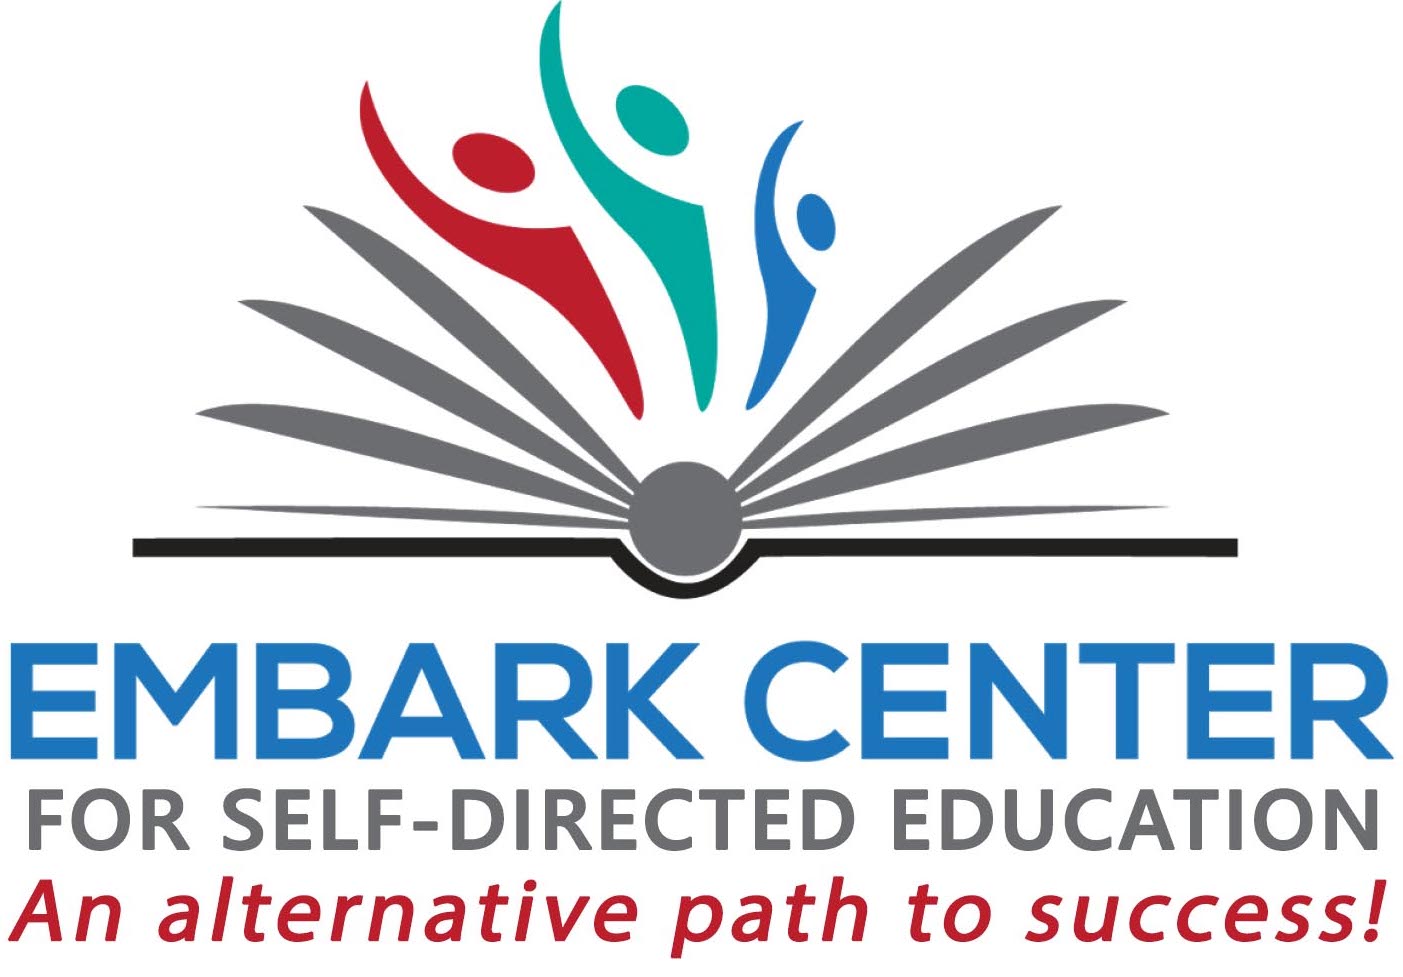 Embark Center for Self-Directed Education logo